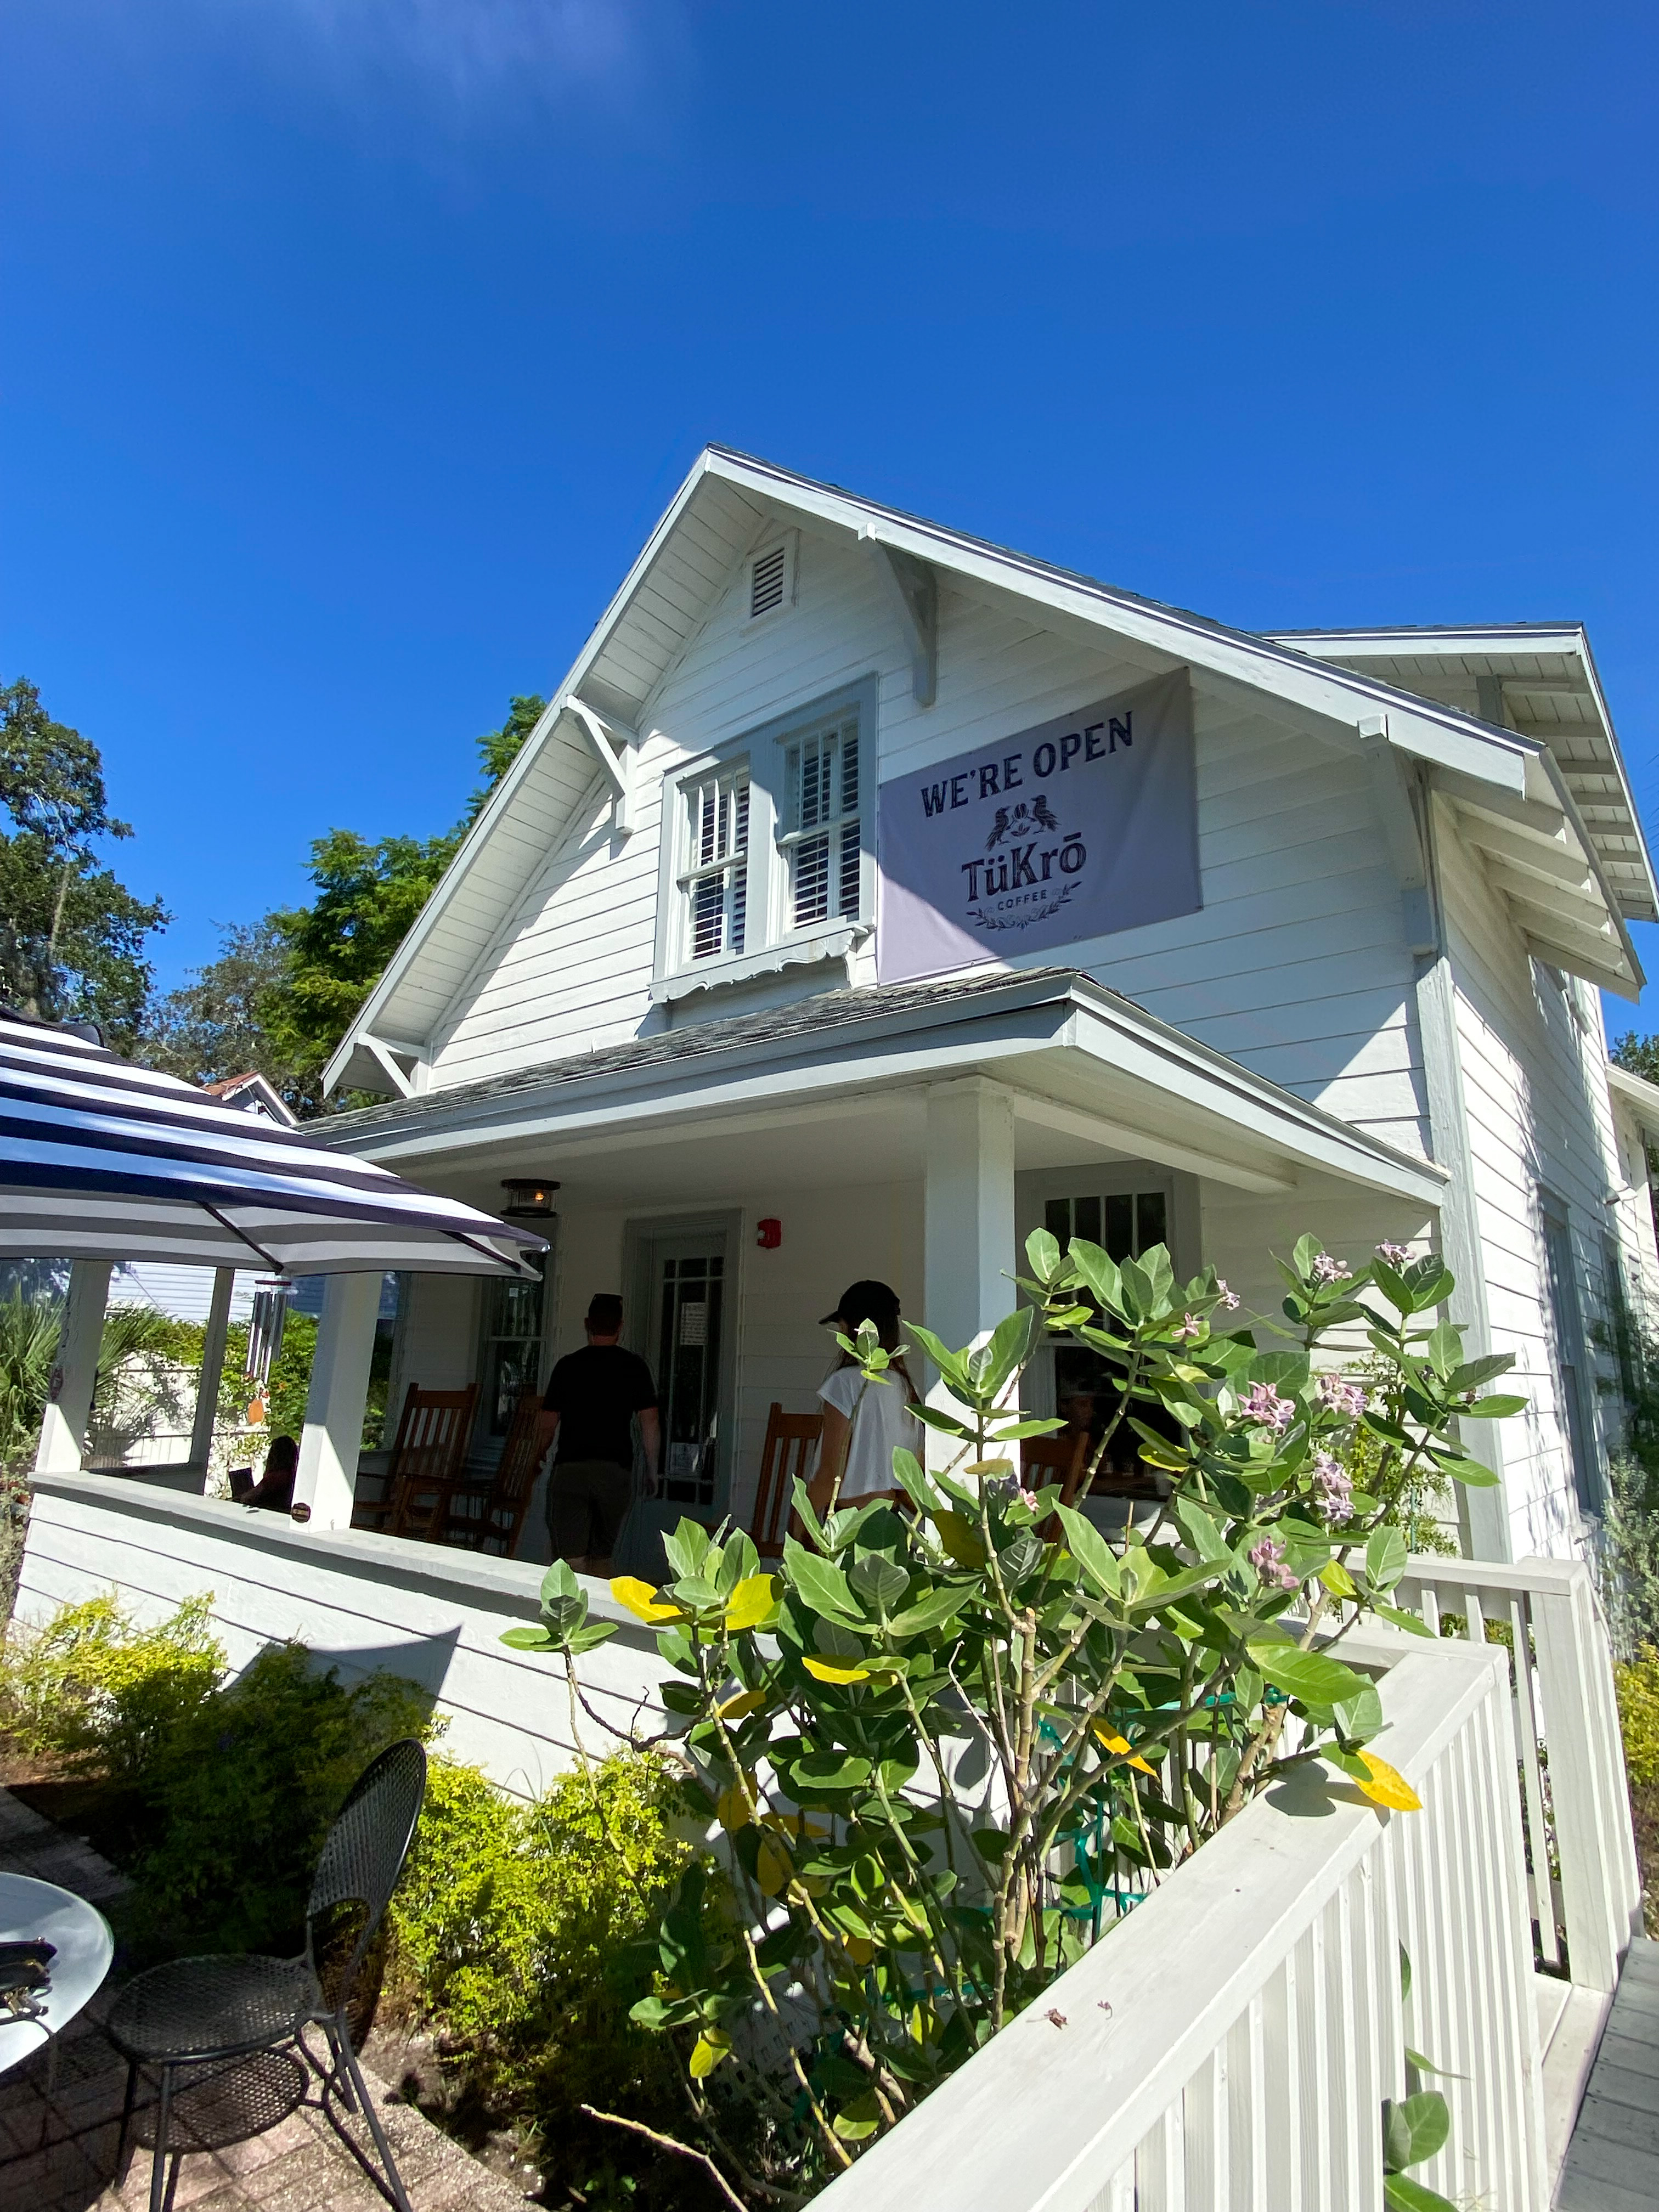 Tukro Coffee in Dunedin Florida